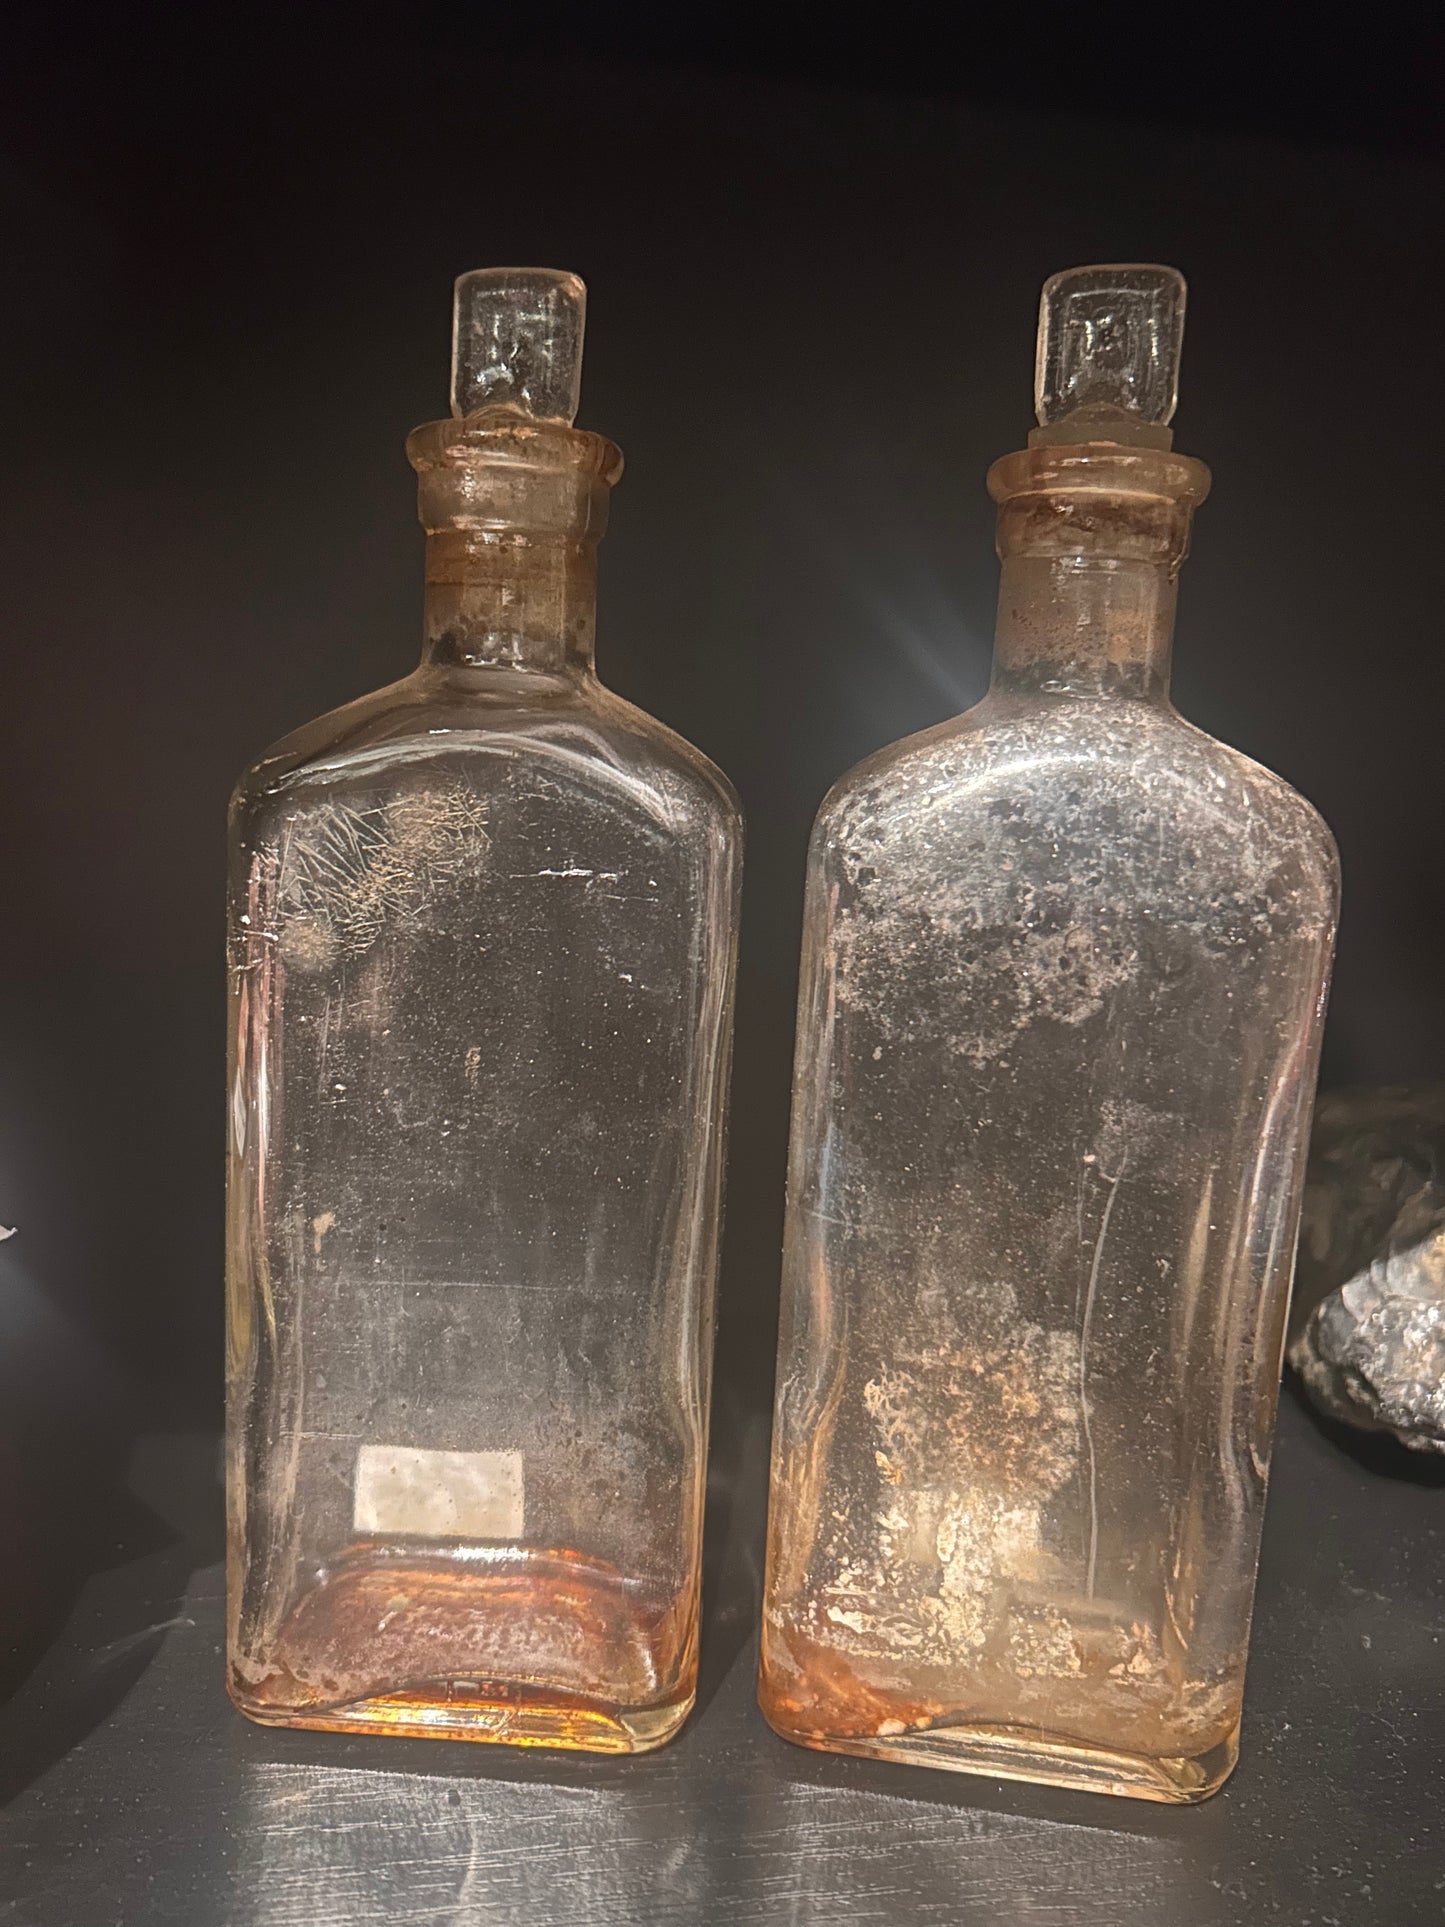 Vintage Tonic Bottles